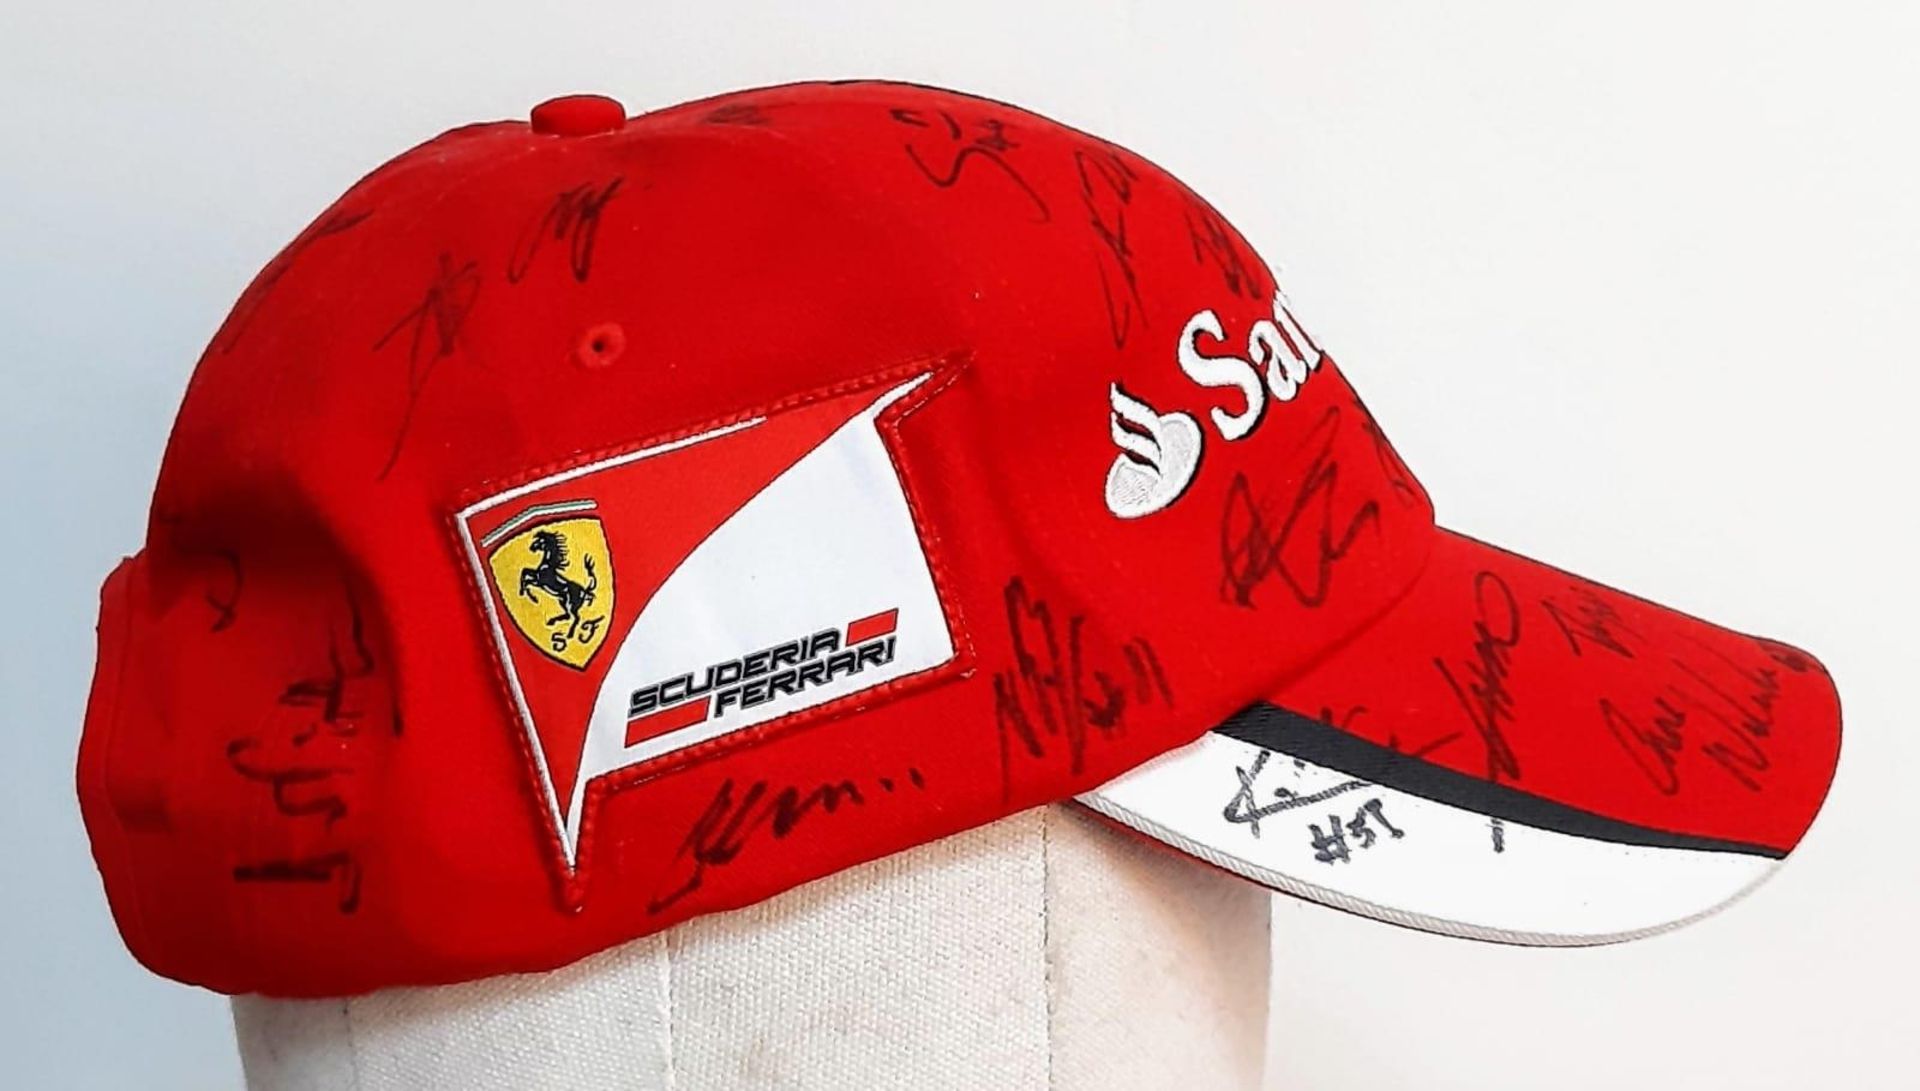 An Official Ferrari Team Cap - Over 20 signatures including Ferrari drivers and team principals. - Image 4 of 14